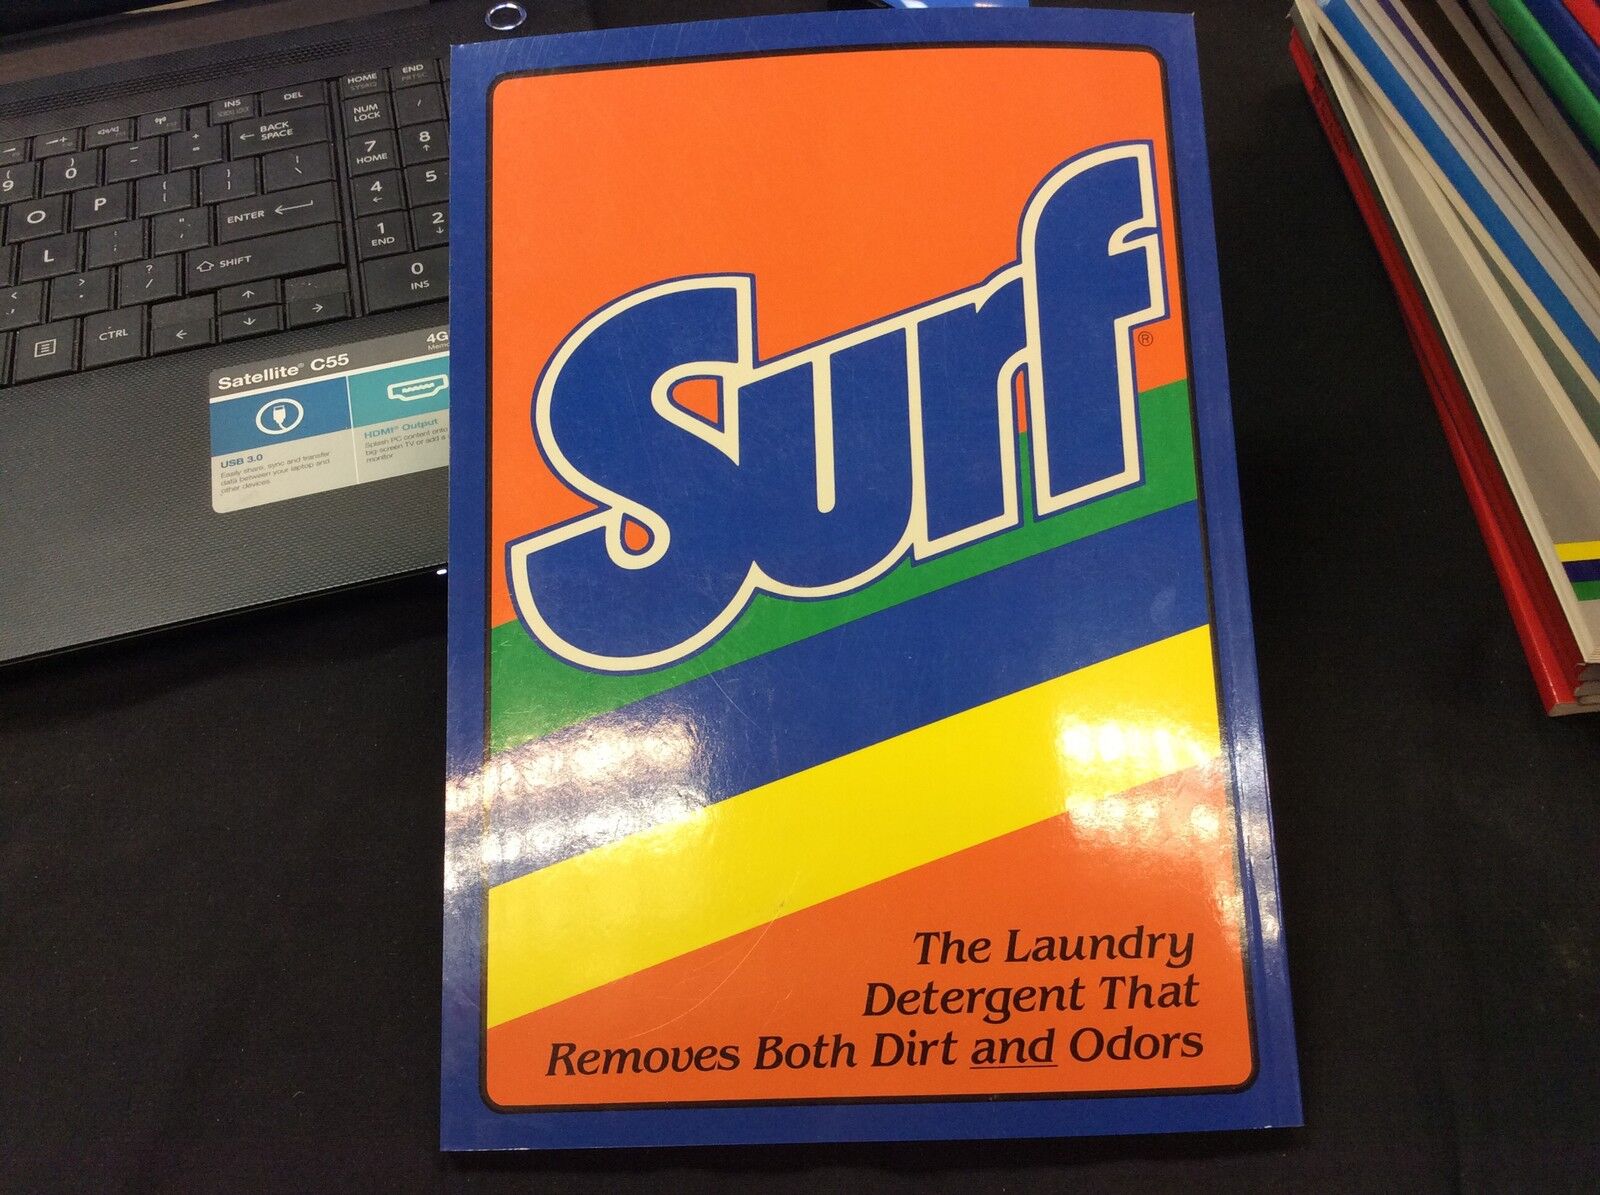 San Francisco Giants 1988 SURF Topps Baseball Card Book